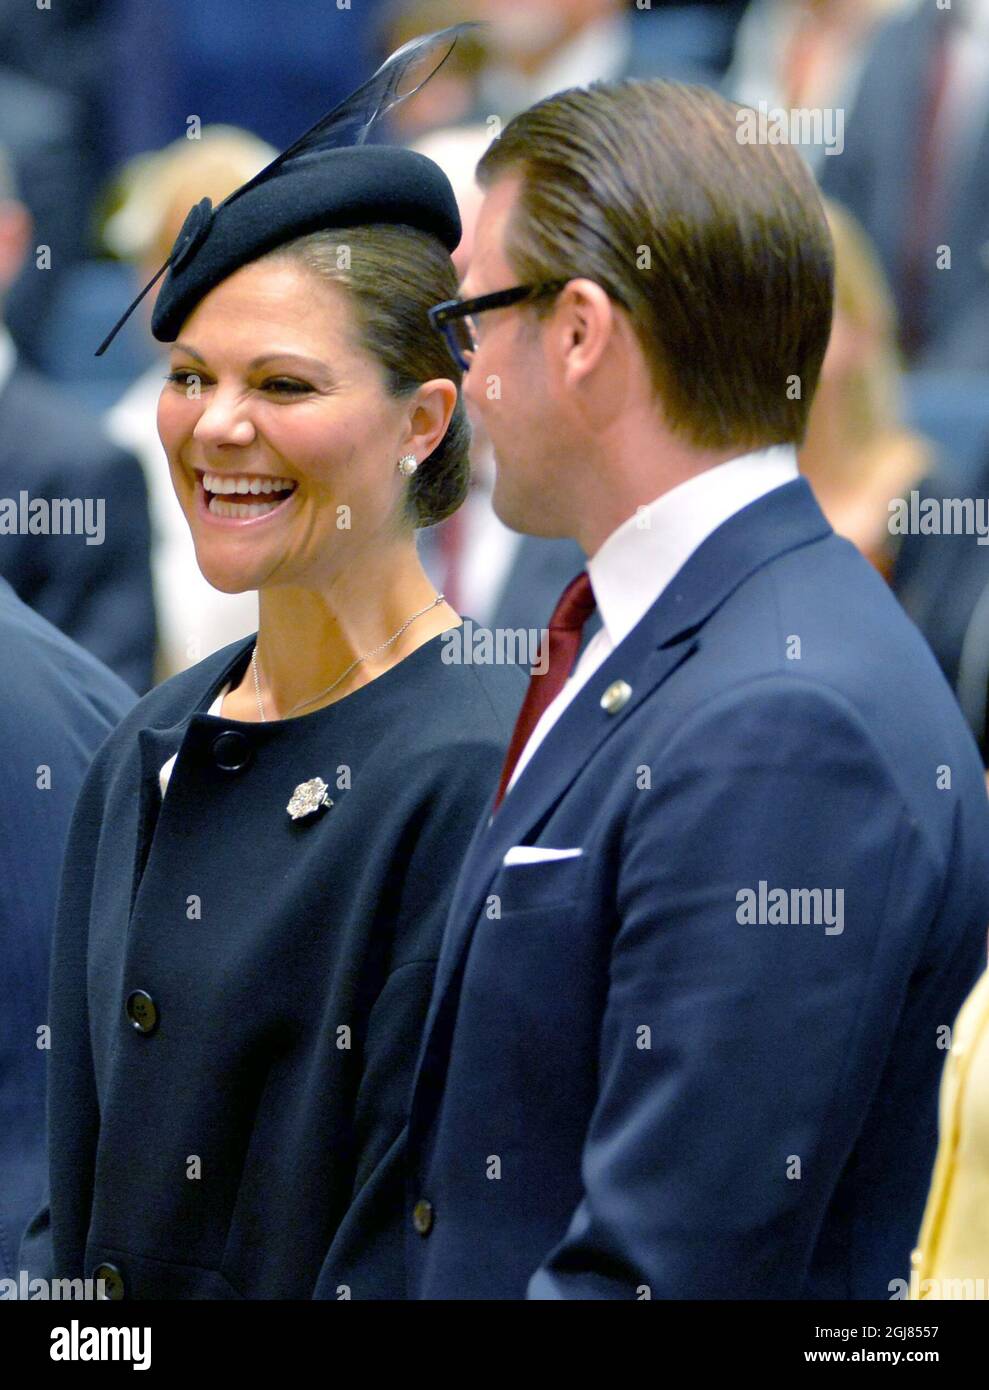 STOCKHOLM 2013-09-17 Crown Princess Victoria and Prince Daniel arrive to the opening of the Parliament in Stockholm, Sweden, September 17, 2013 Foto: Jonas Ekstromer / SCANPIX / Kod 10030  Stock Photo